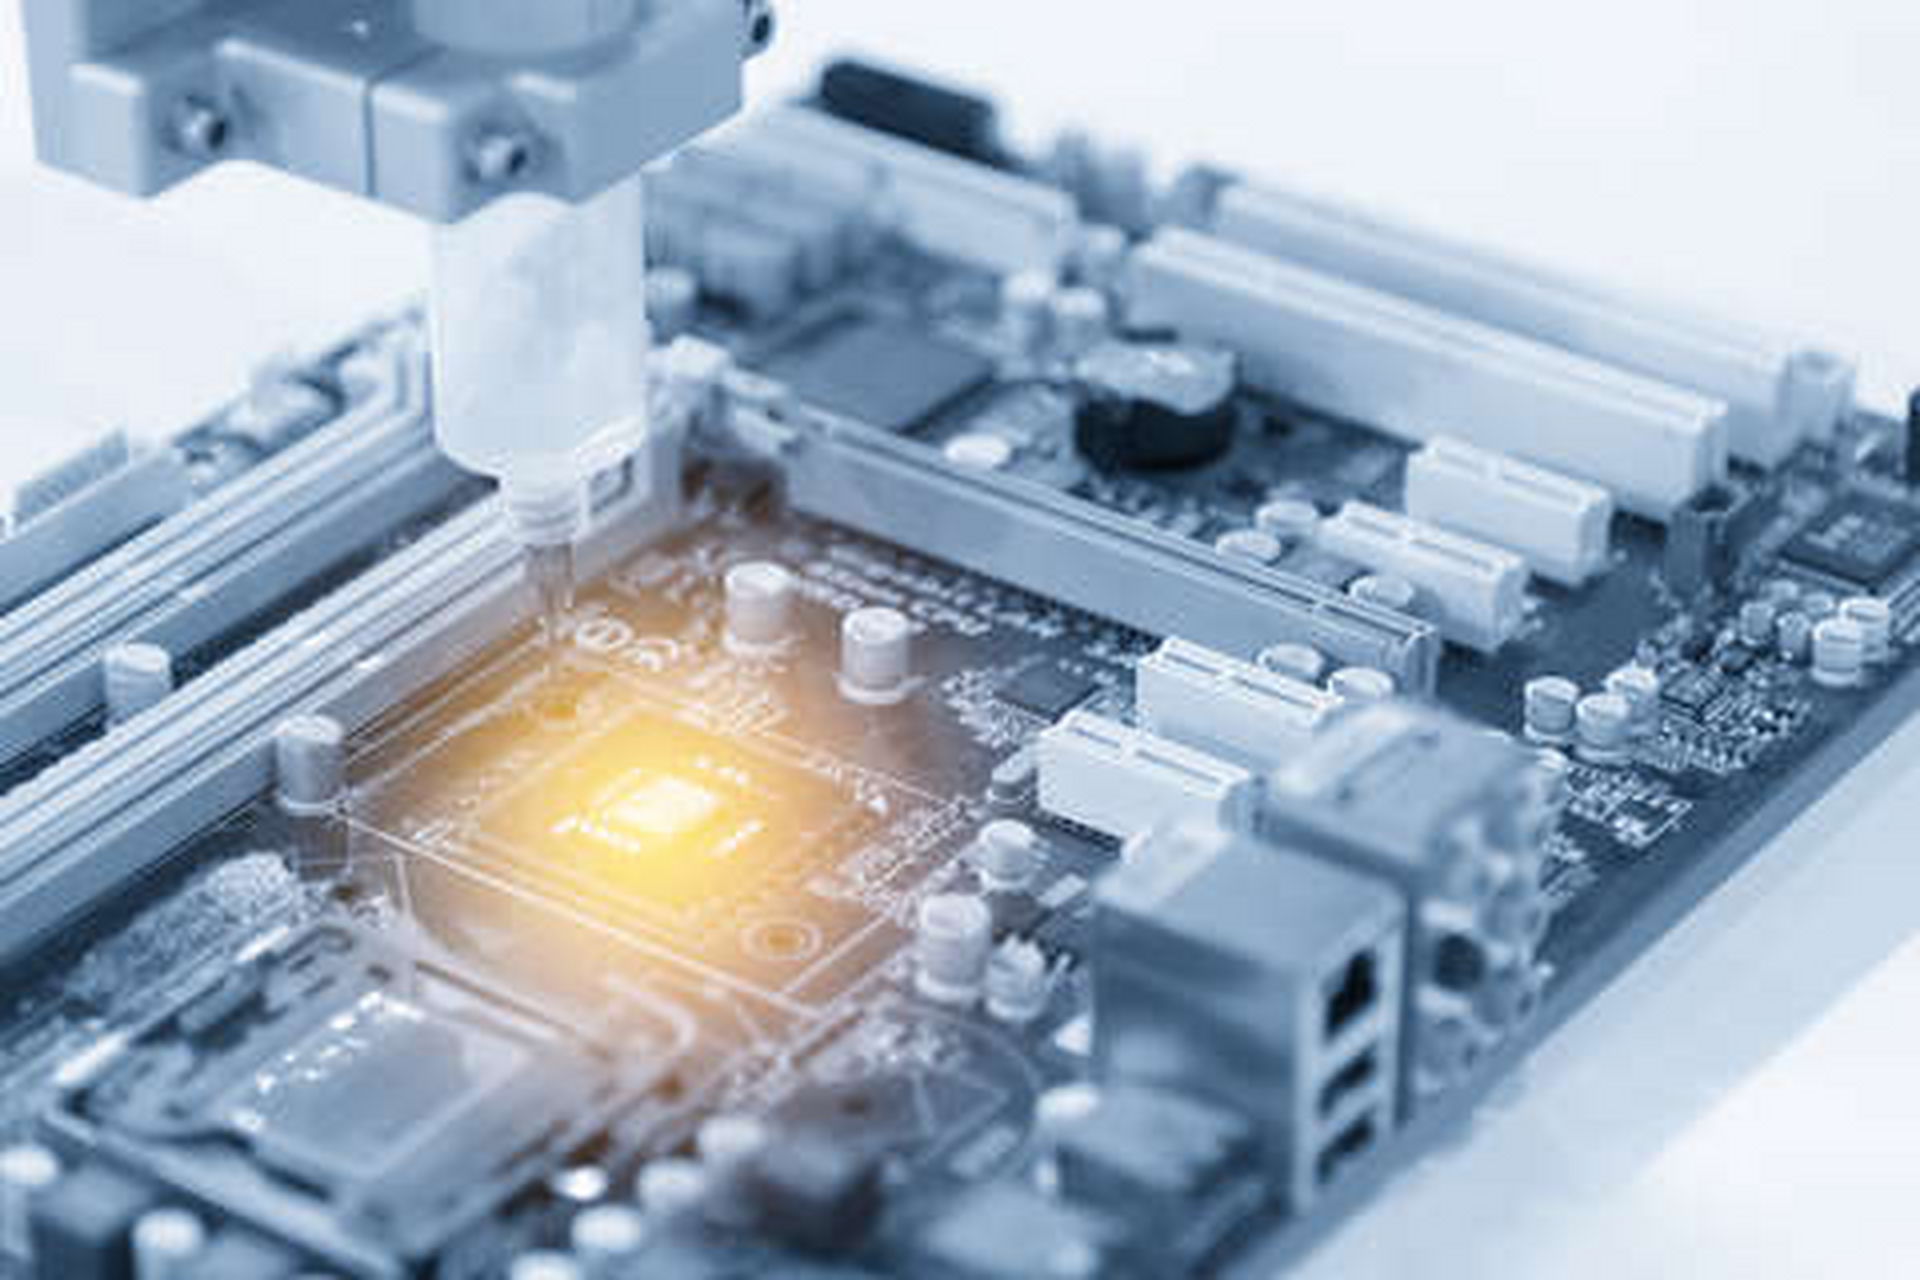 Industrial embedded motherboards